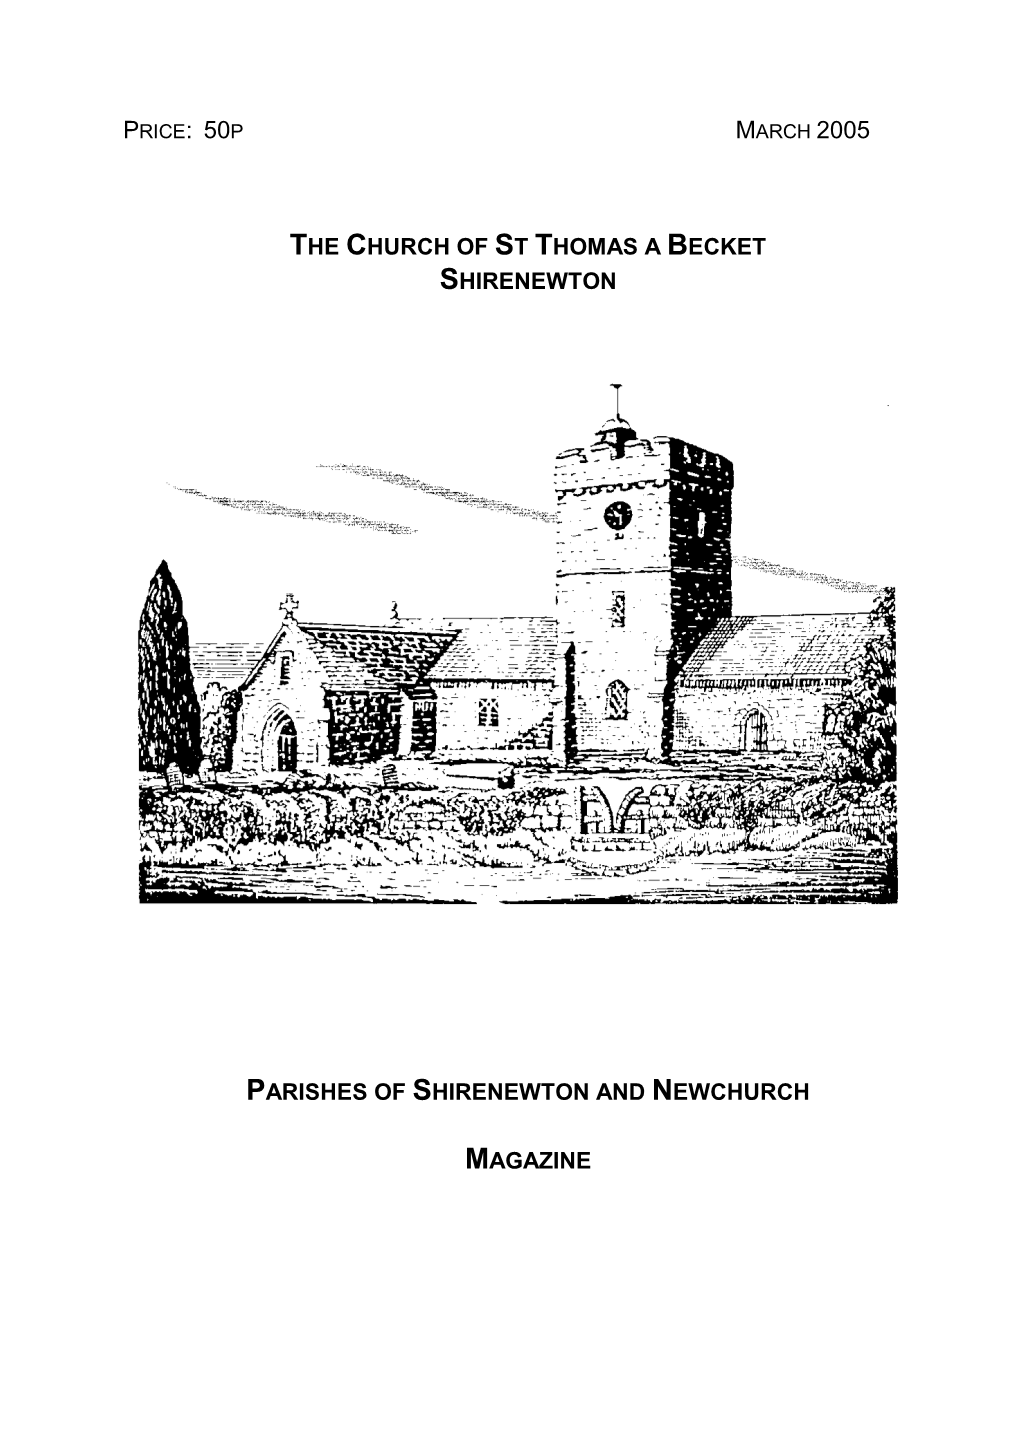 The Church of St Thomas a Becket Shirenewton Parishes of Shirenewton and Newchurch Magazine